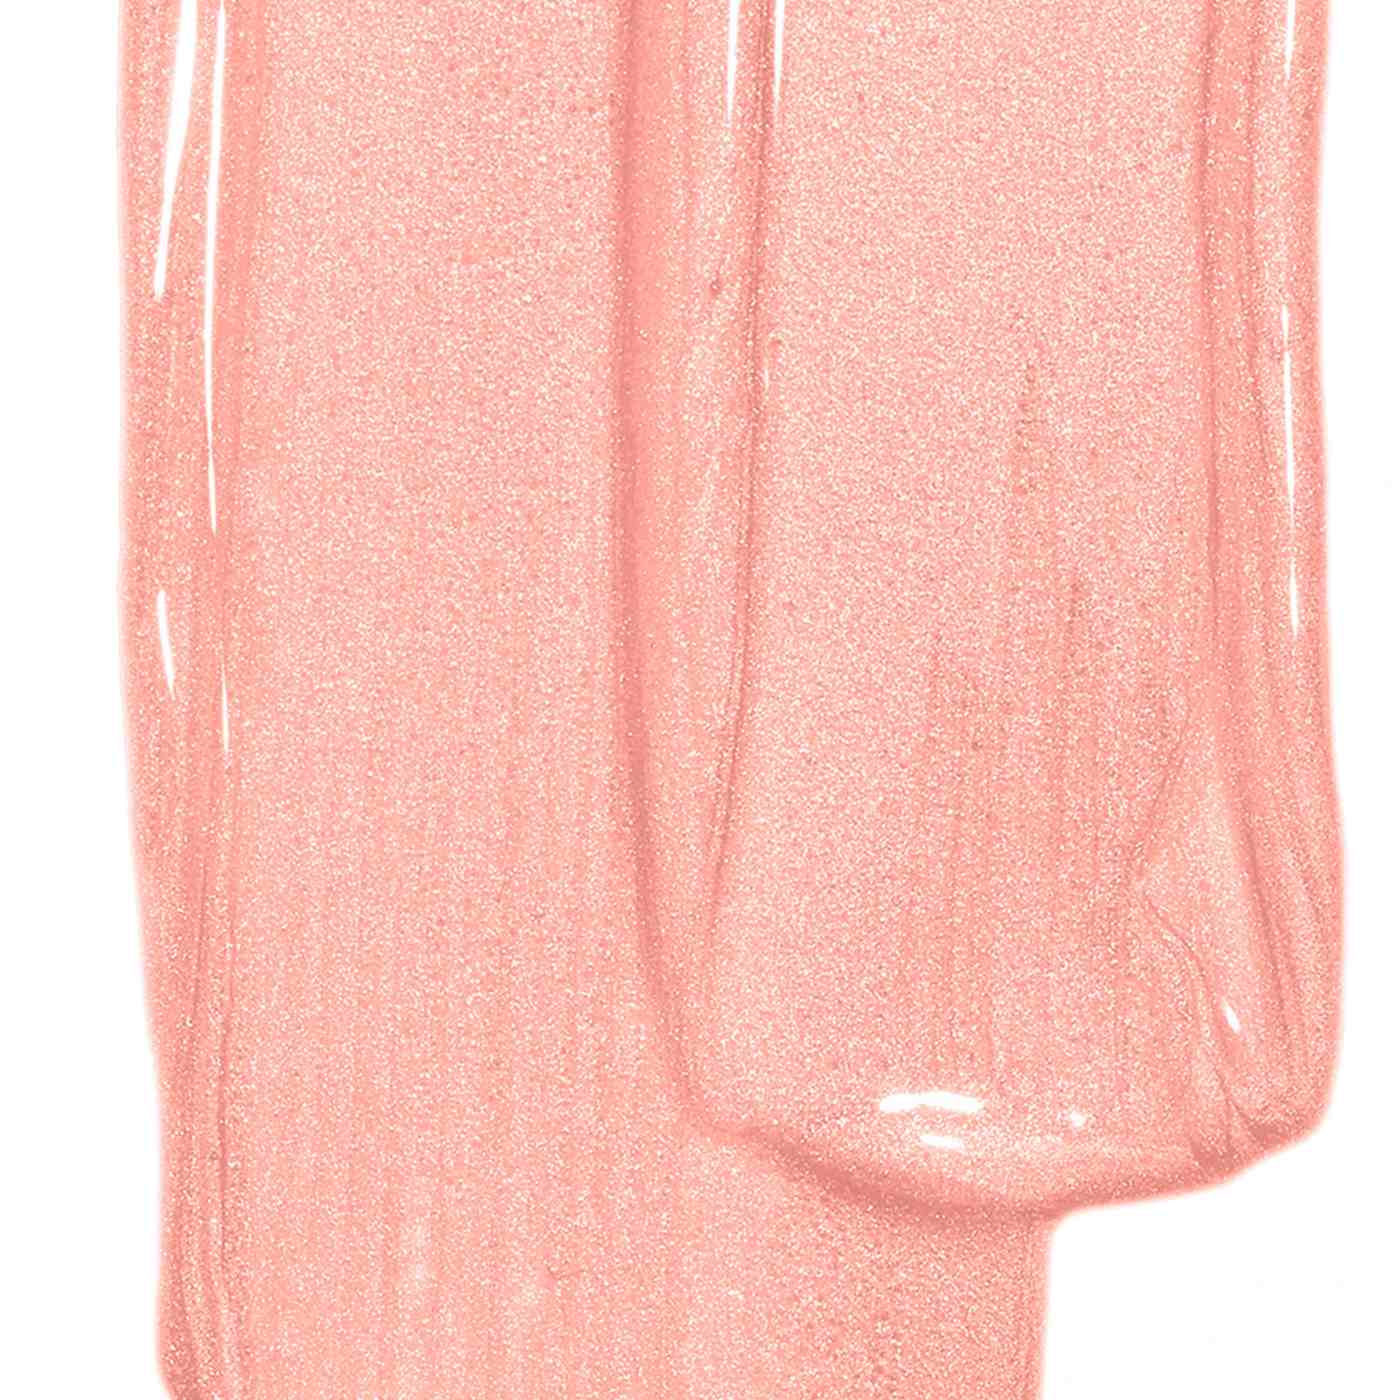 Revlon Super Lustrous The Gloss, 205 Snow Pink; image 6 of 9